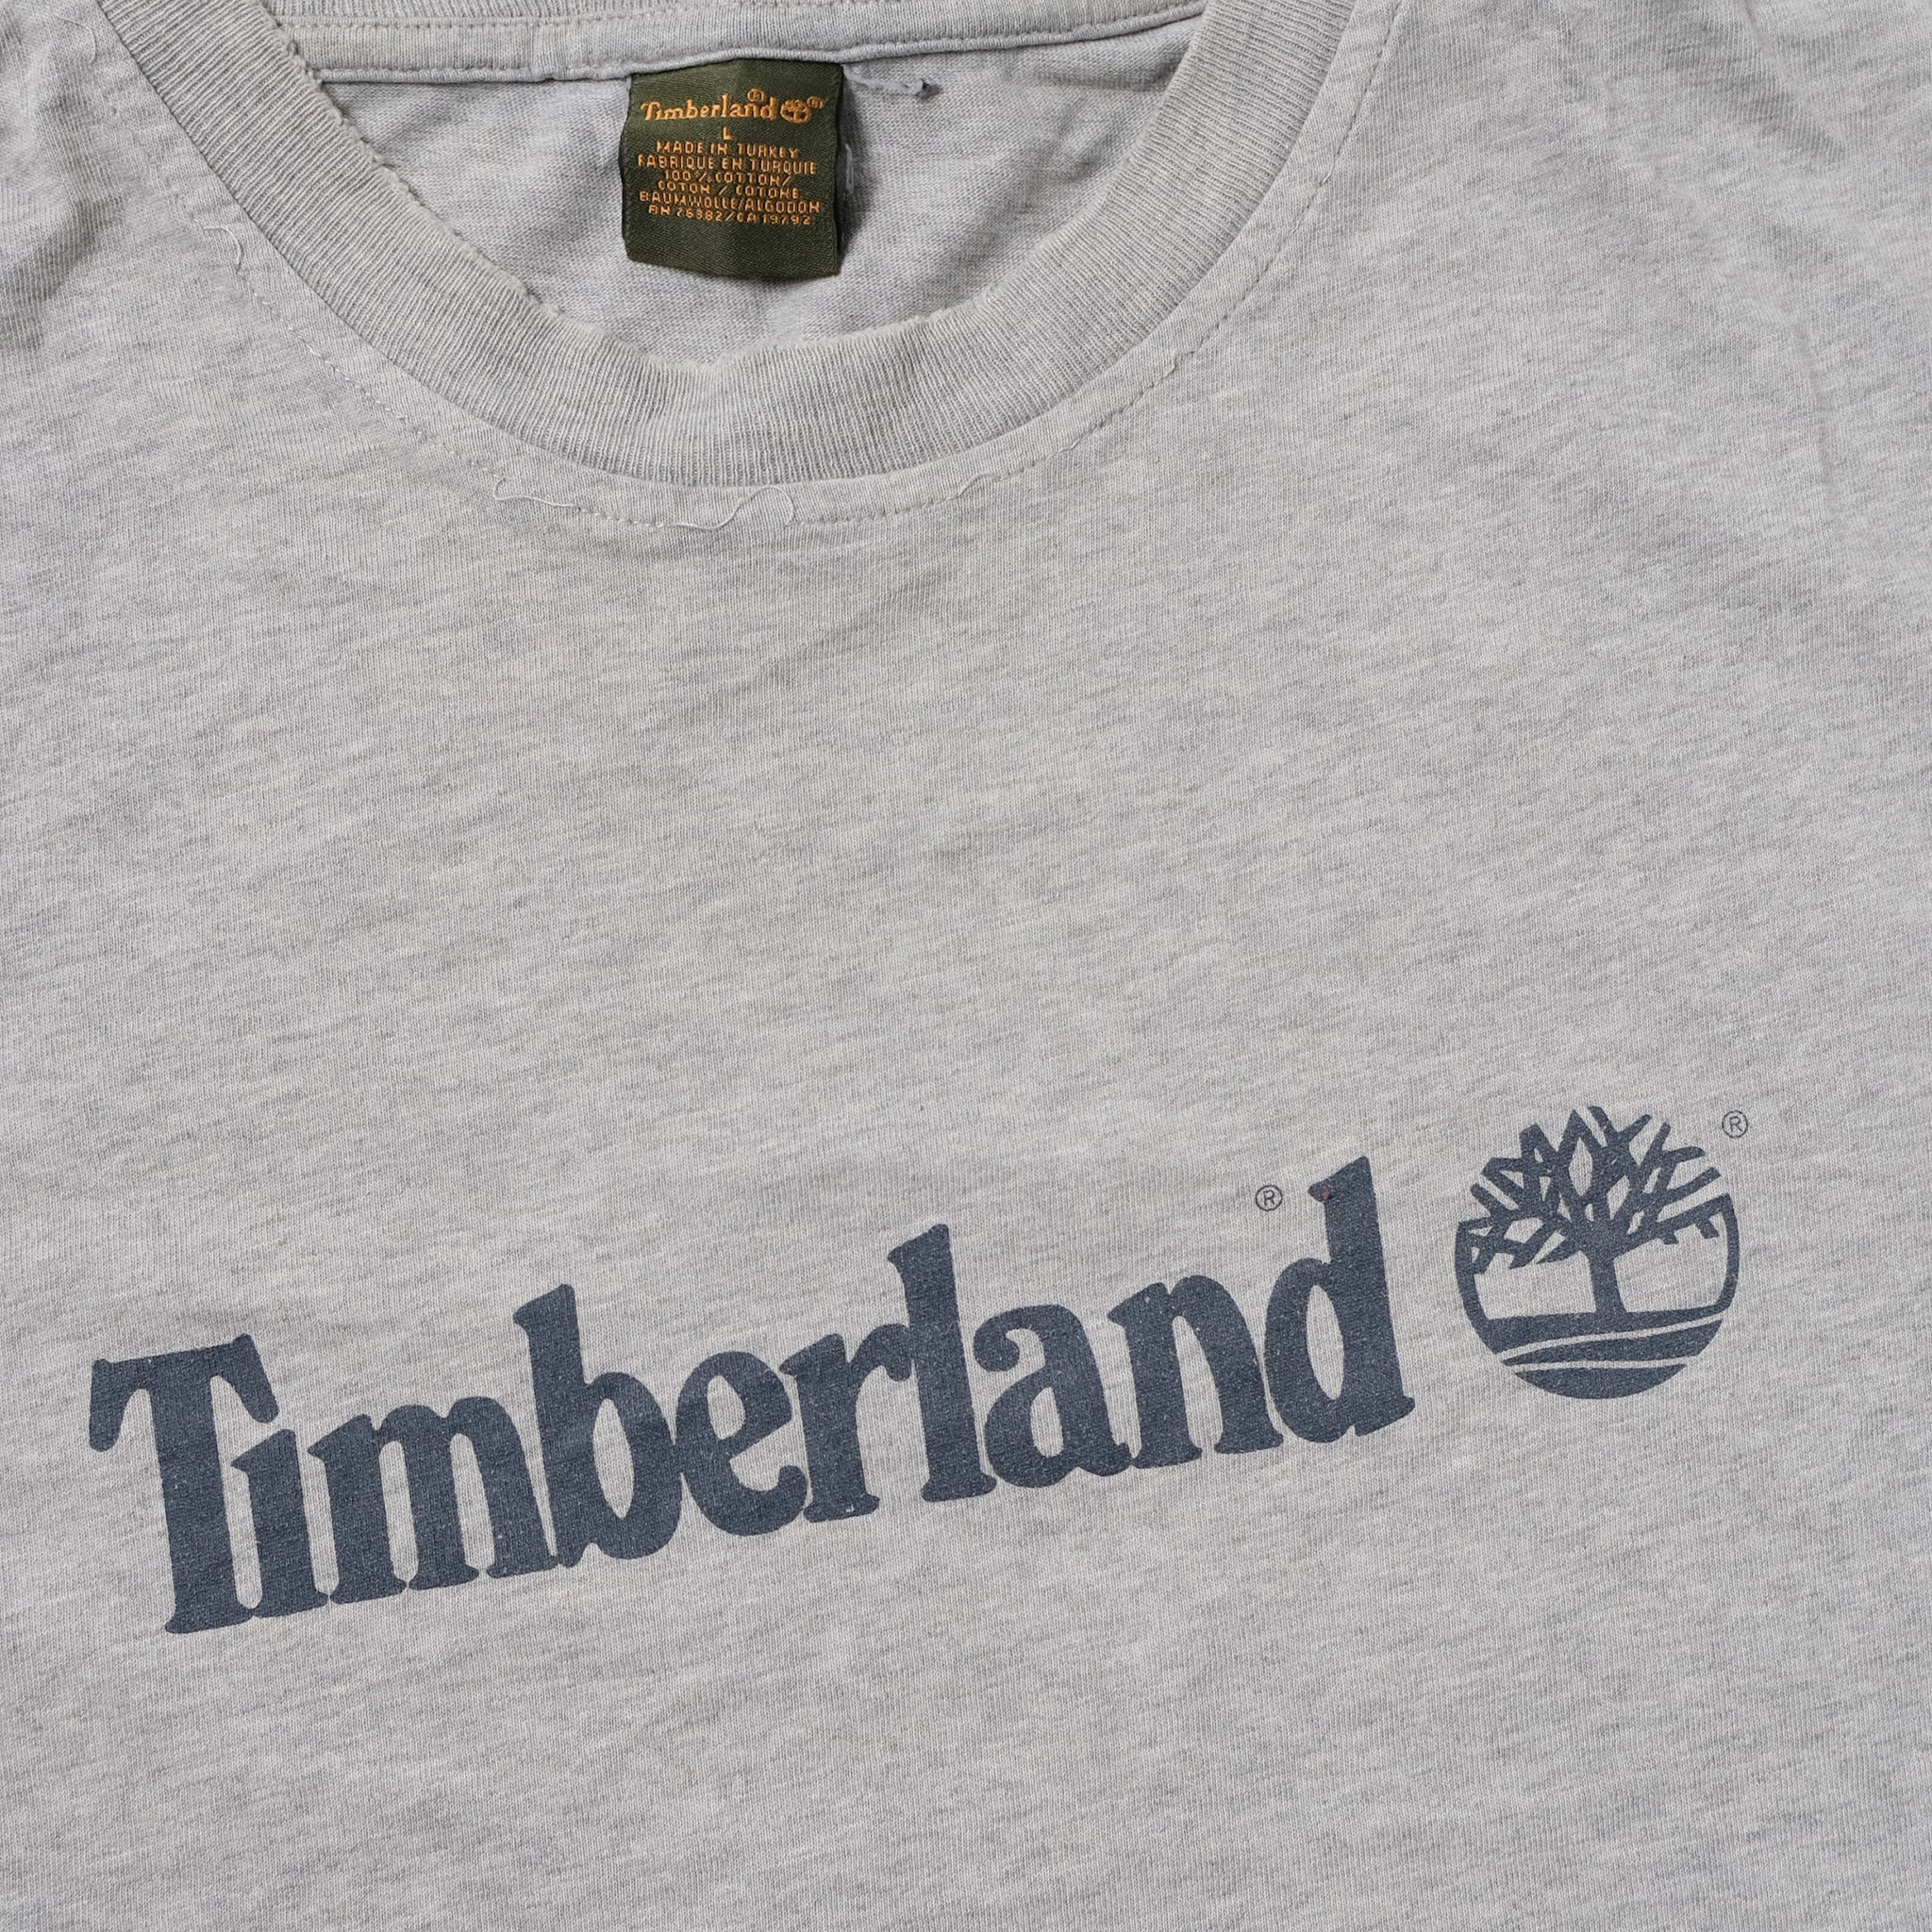 Vintage Timberland T-Shirt Medium / Large | Double Double Vintage